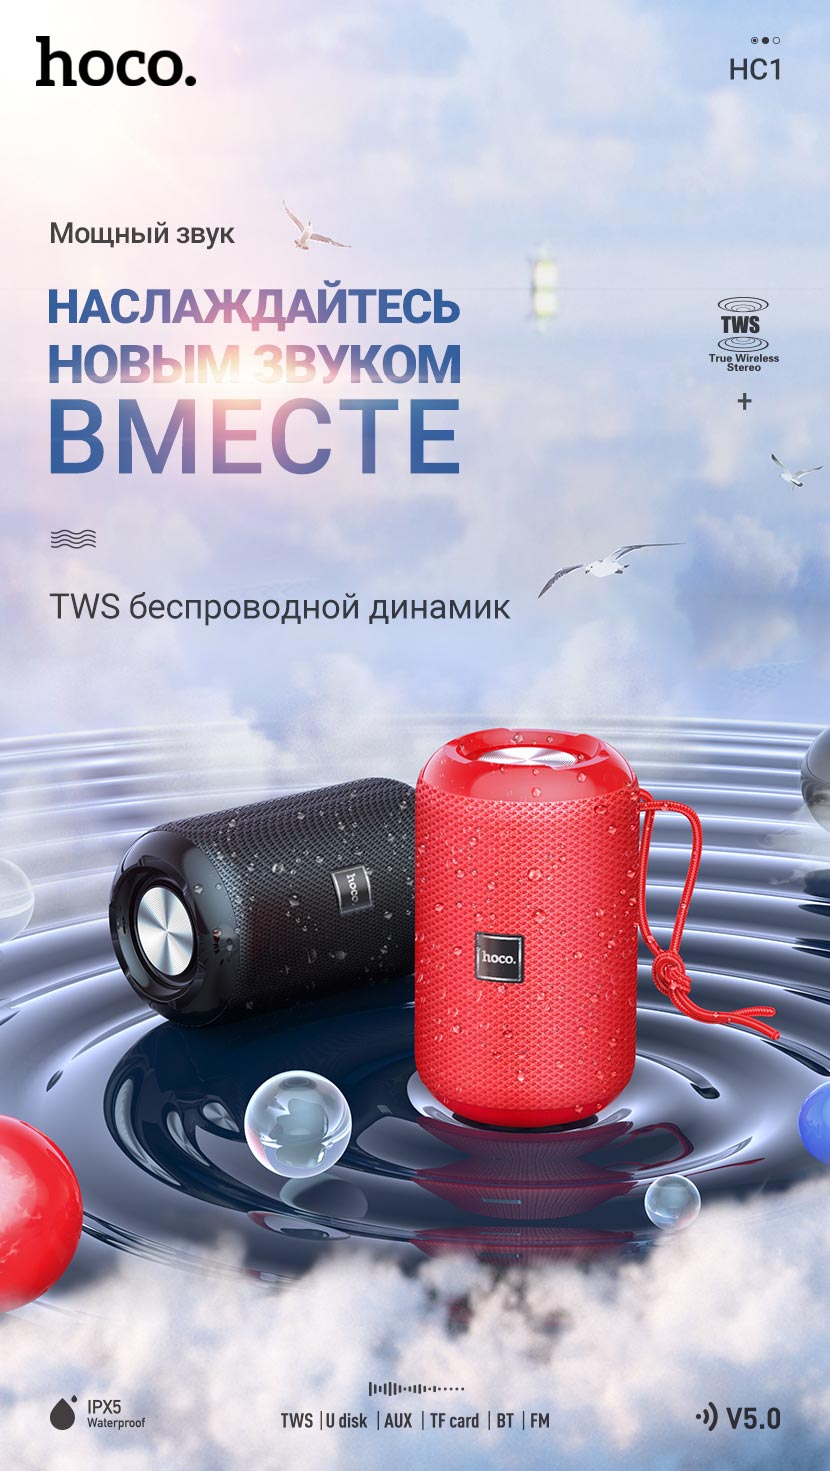 hoco news hc1 trendy sound sports wireless speaker ru